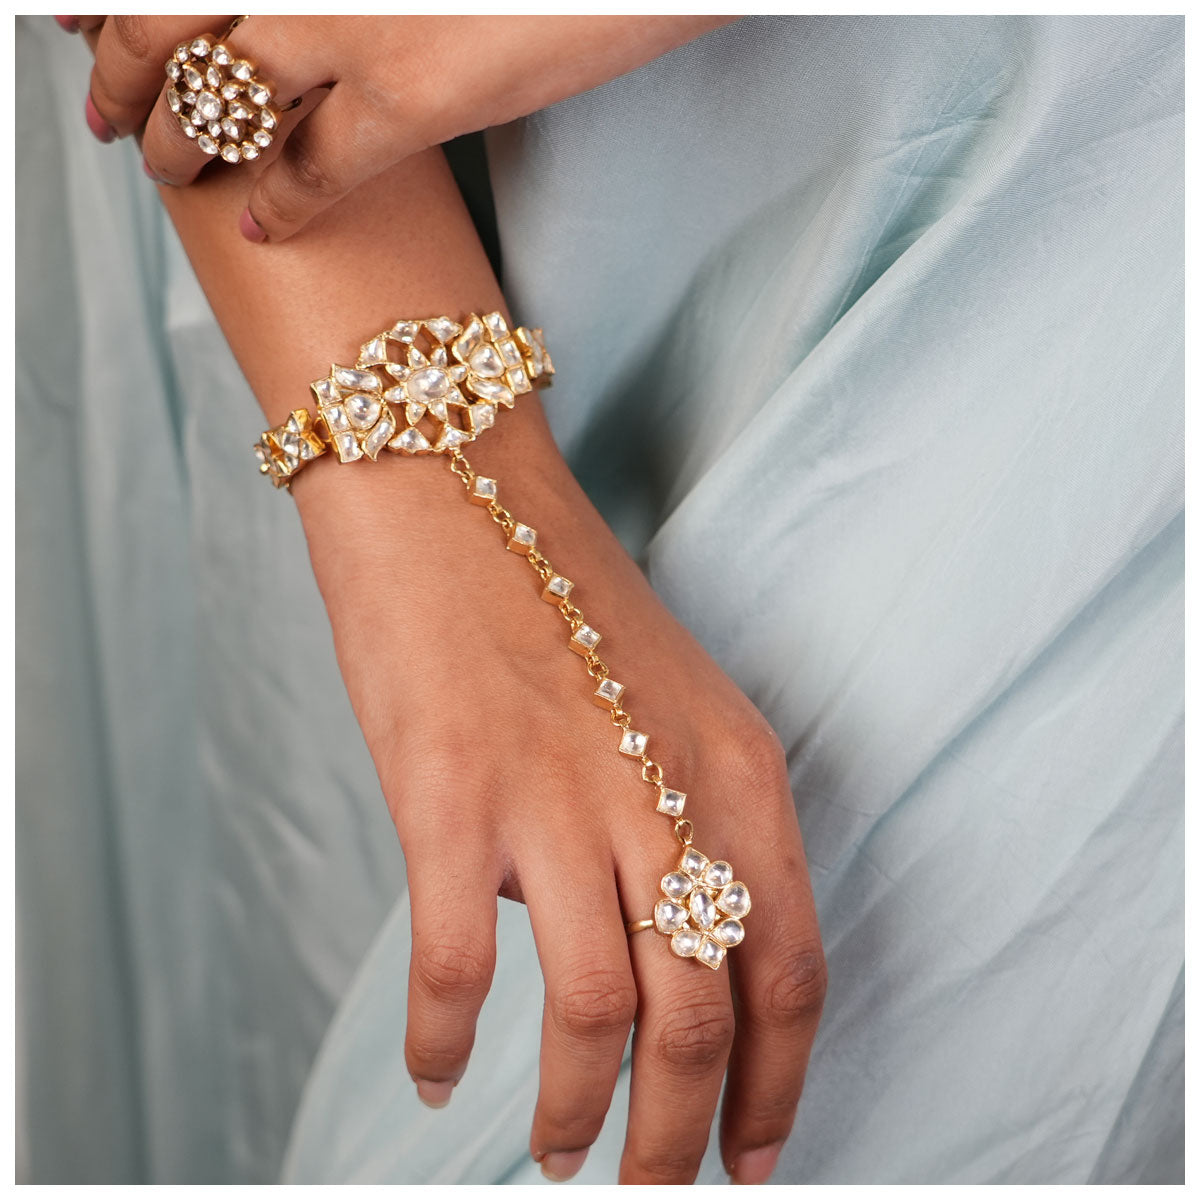 Indian Kundan Ethnic Women Hand Harness Finger Ring Bracelet Jewelry | eBay